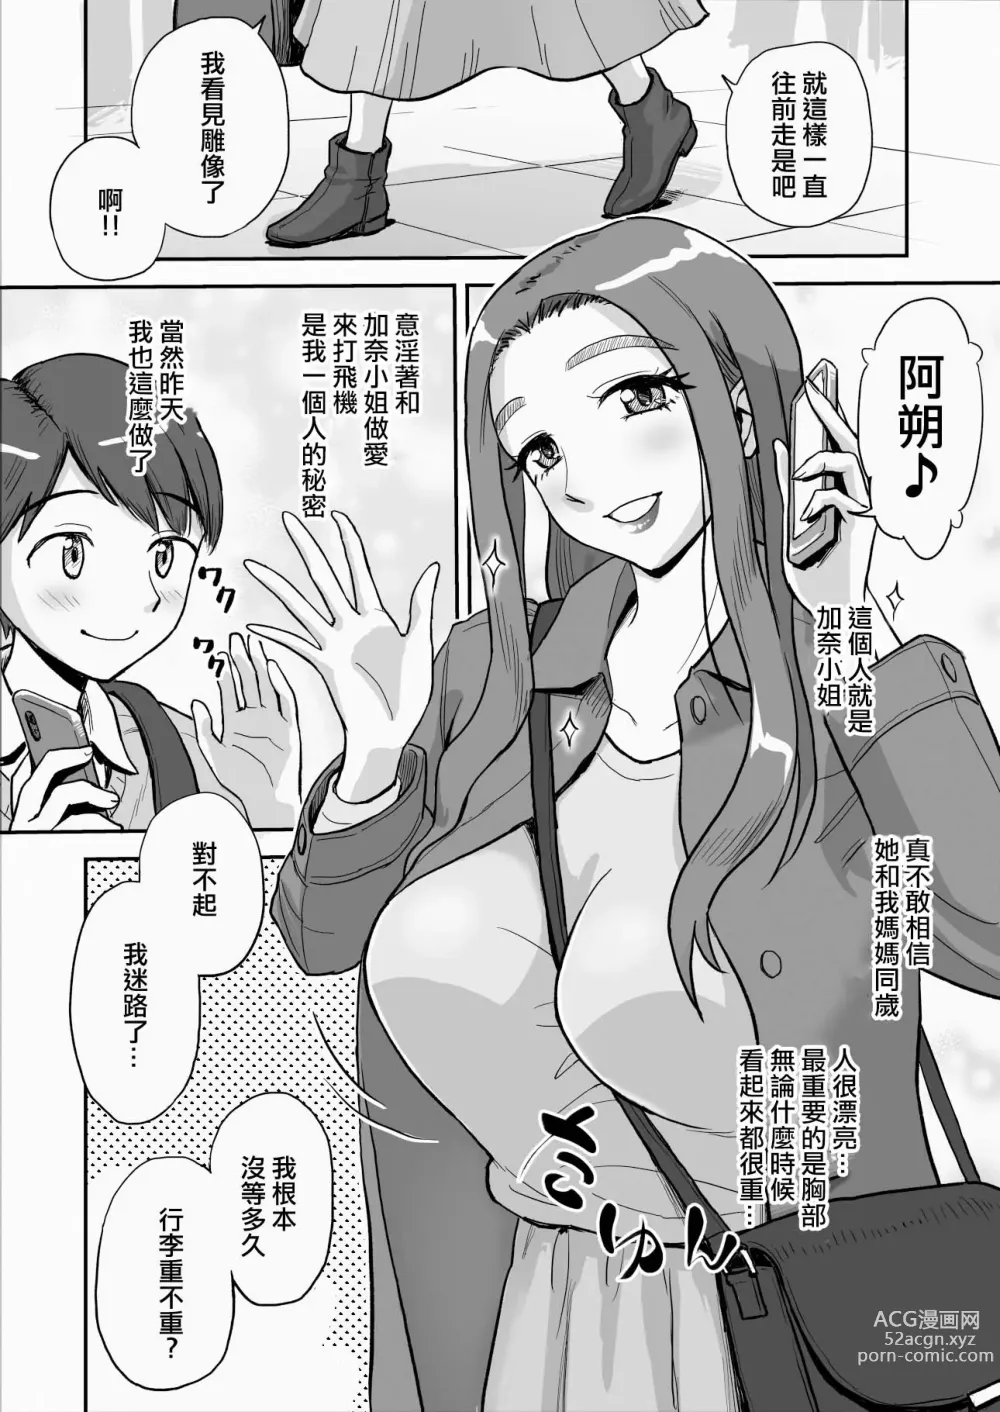 Page 3 of doujinshi 僅此一天的媽媽 這是隻屬於我們...兩人的秘密...哦?....